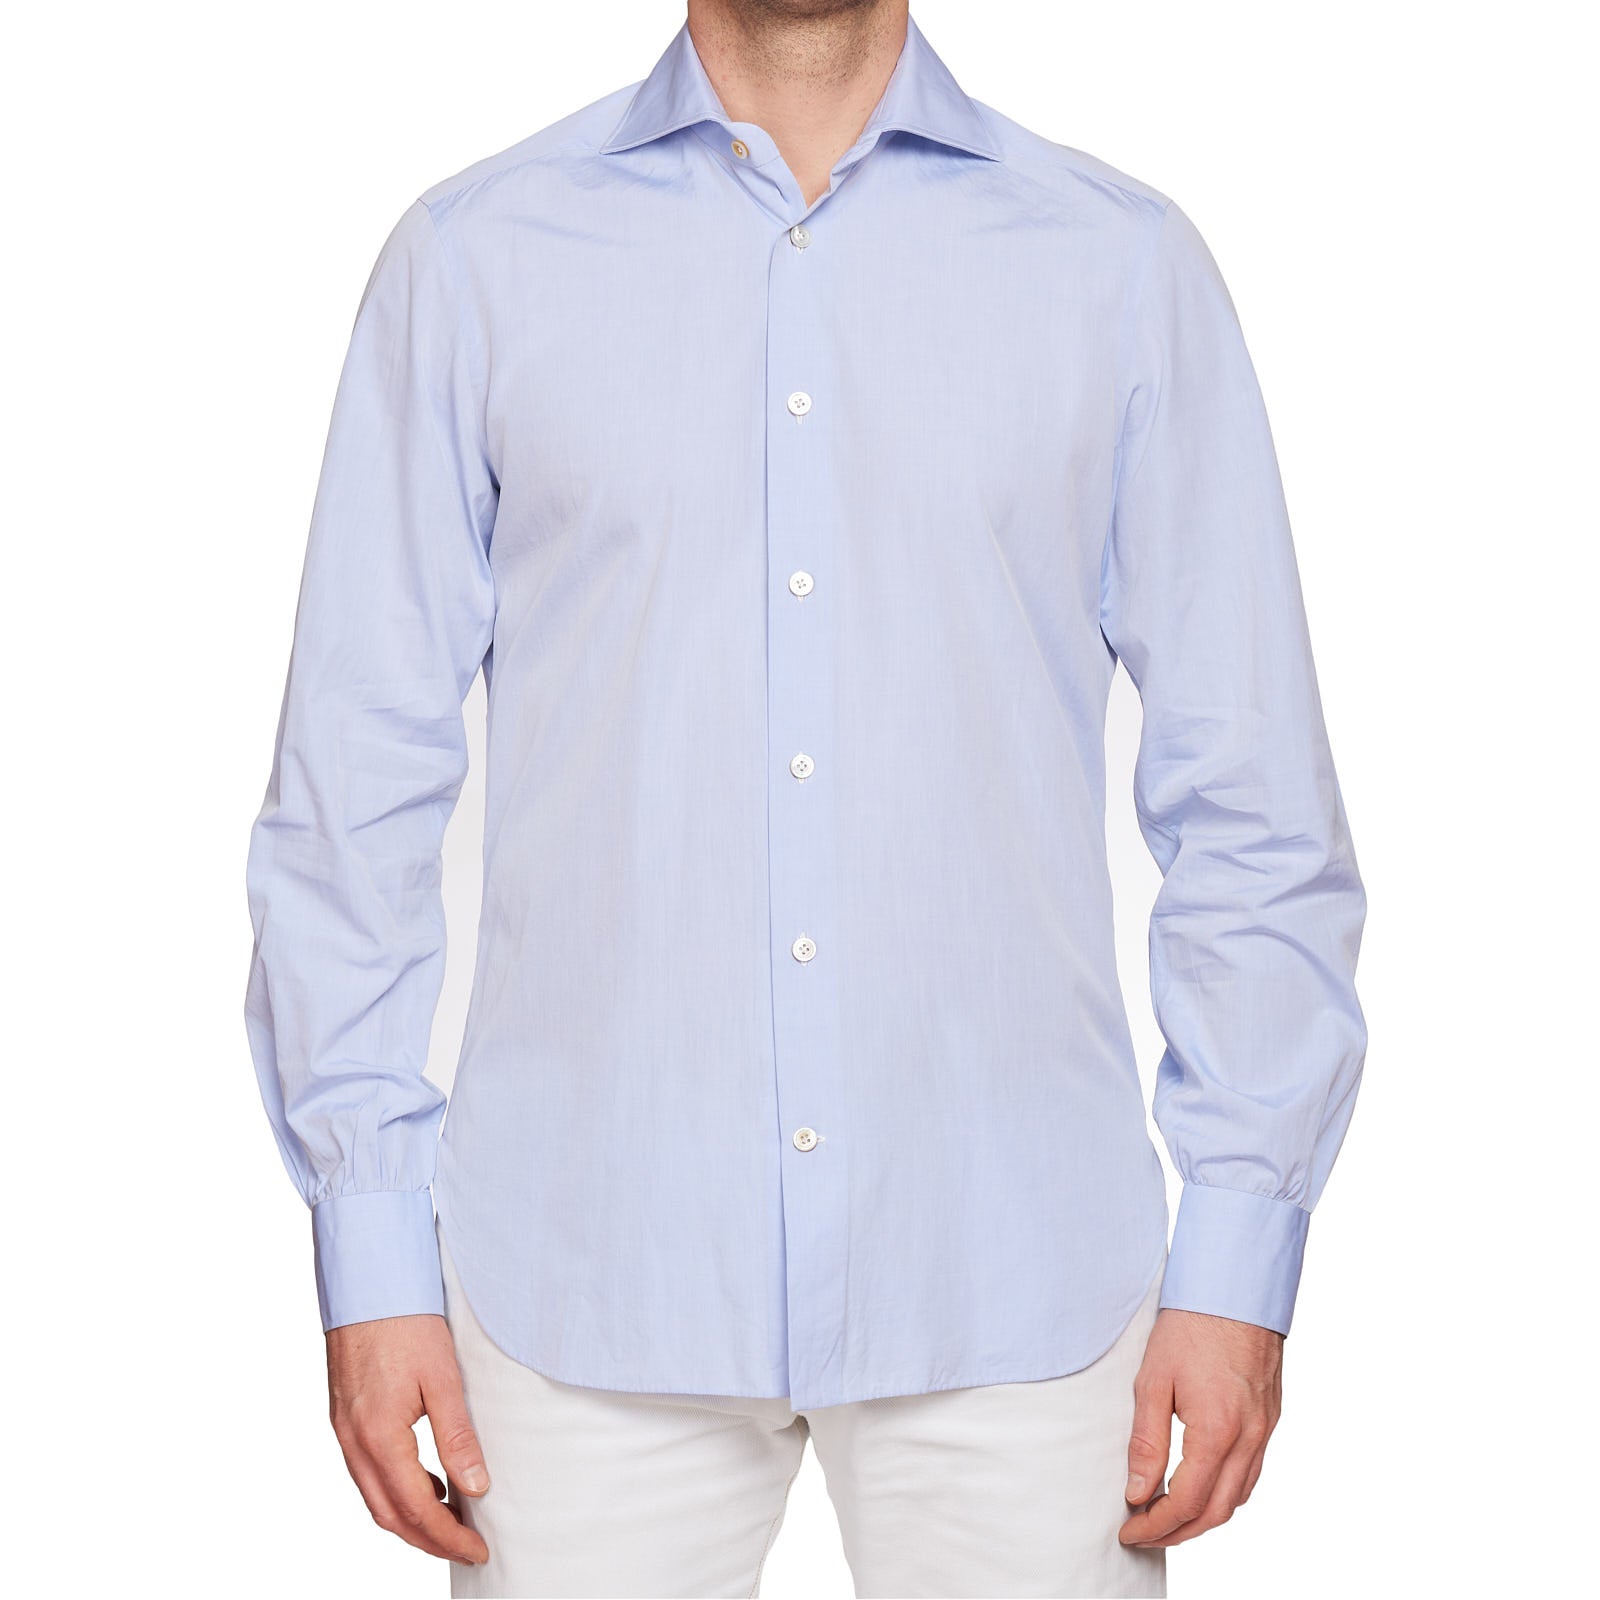 KITON Napoli Handmade Bespoke Light Blue Poplin Cotton Dress Shirt EU 39 NEW US 15.5 KITON